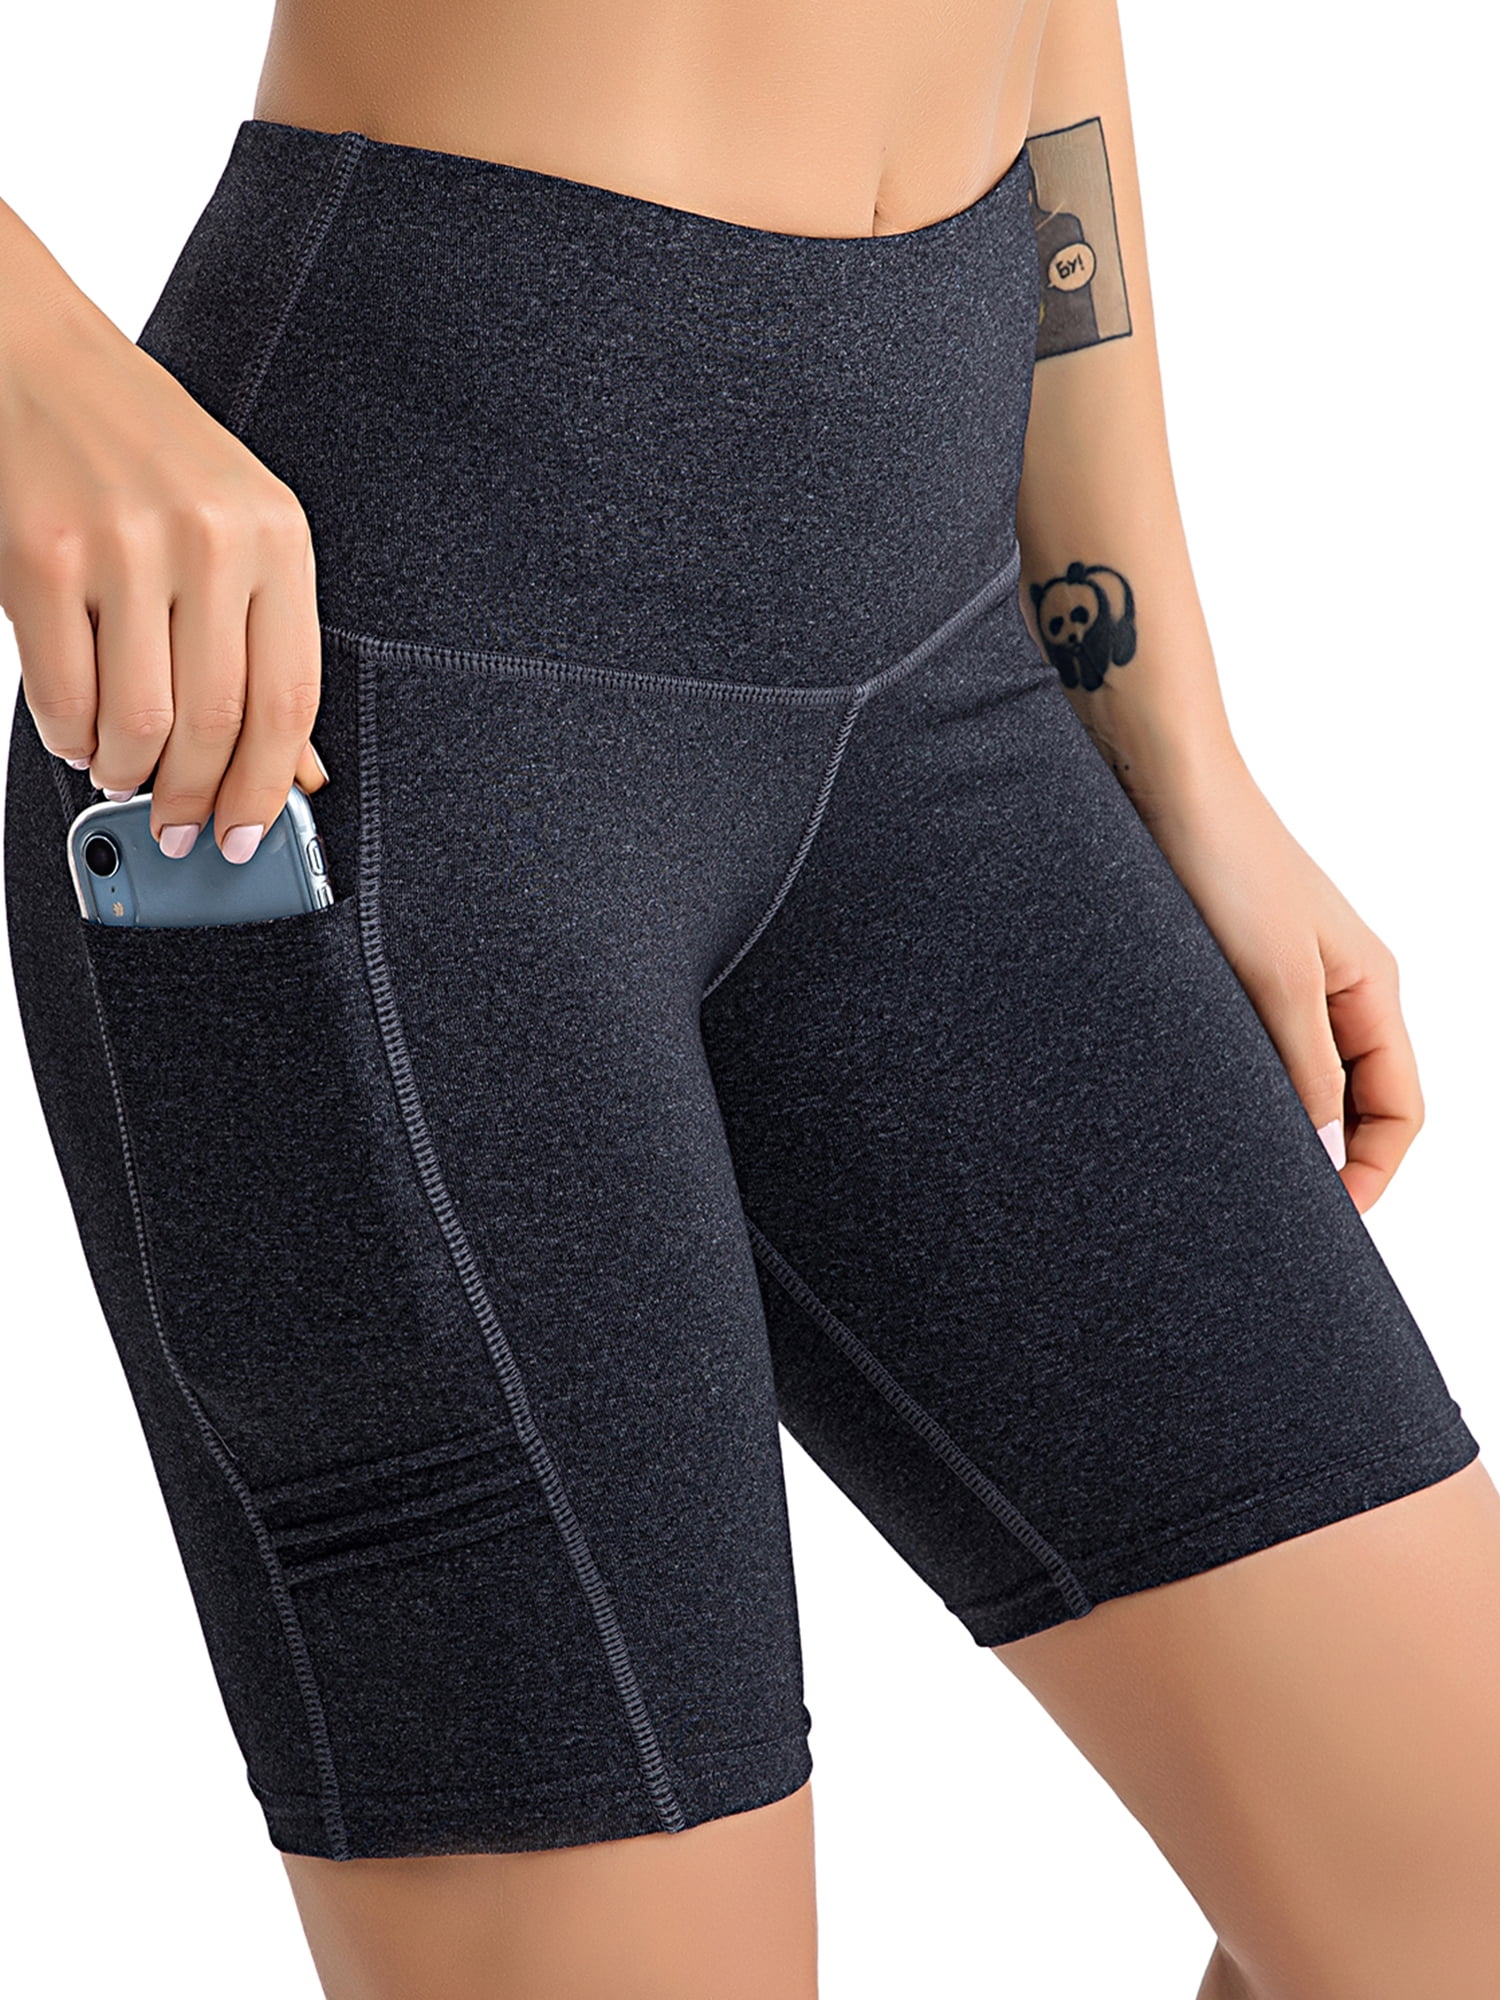 Womens Yoga Shorts with Pockets High Waist Slim Tummy Control Training Workout Running Athletic Elastic Skinny Pants 